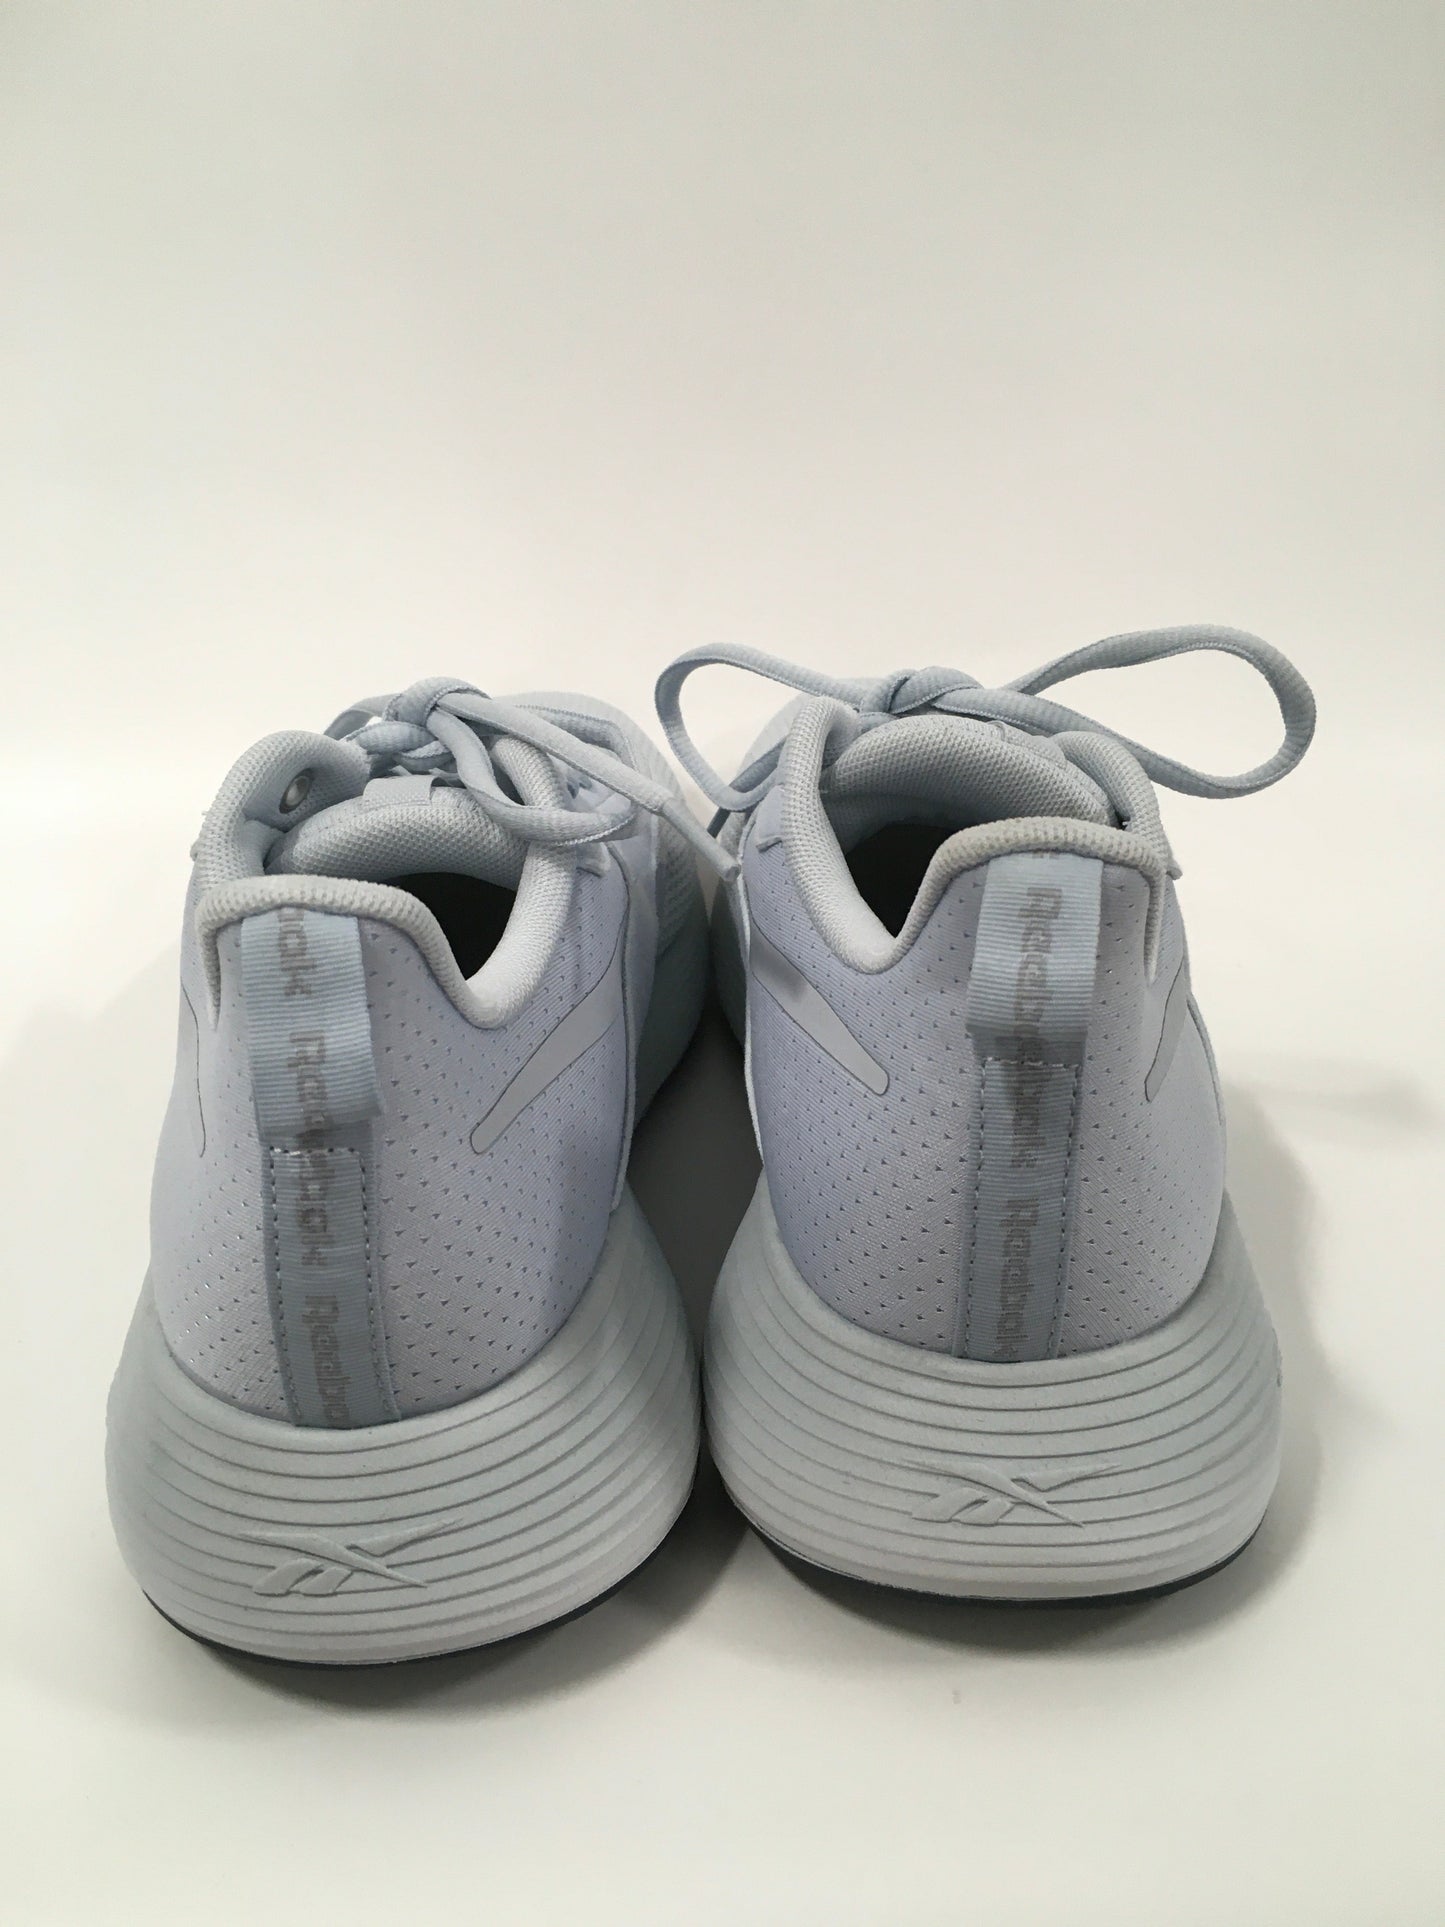 Blue Shoes Athletic Reebok, Size 10.5